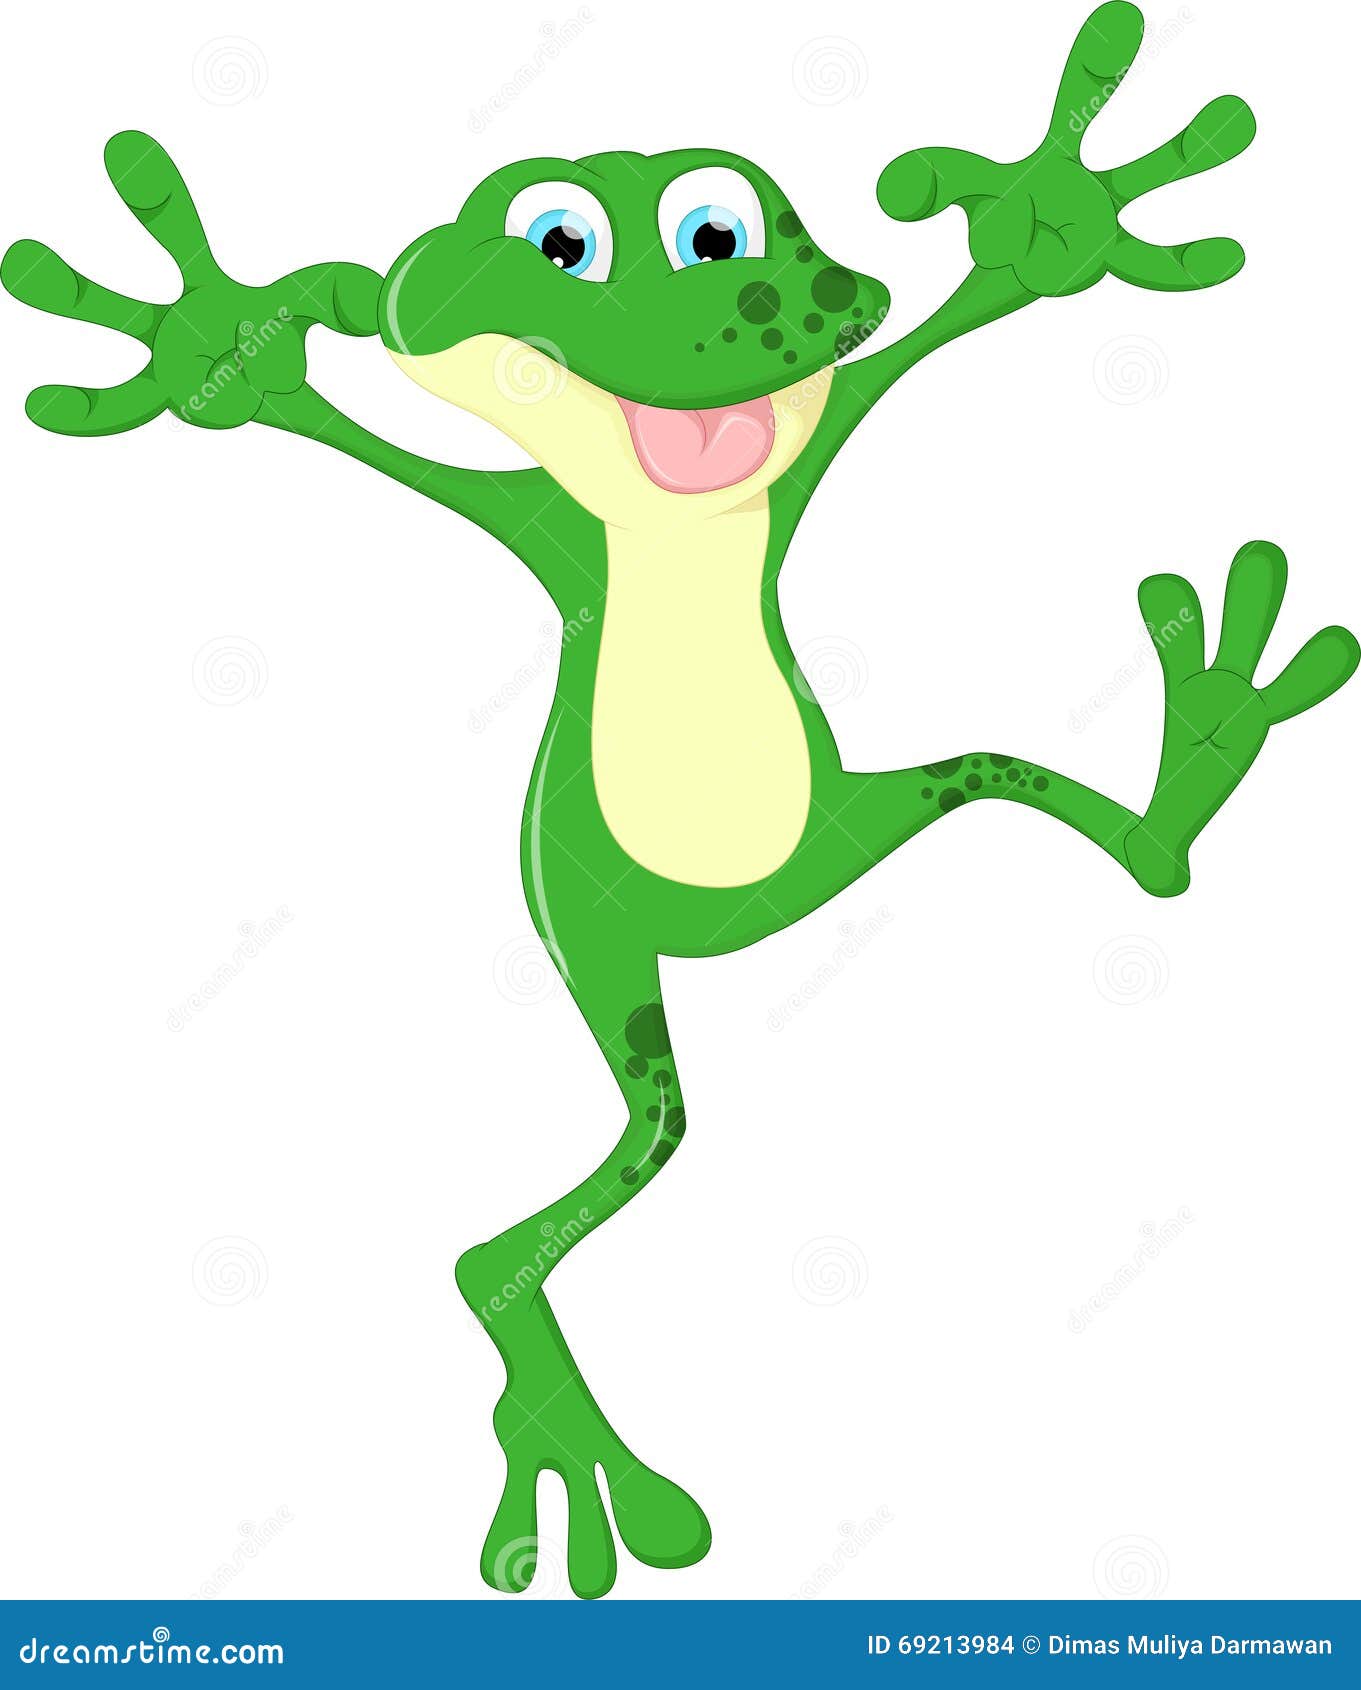 Excited cartoon frog stock illustration. Illustration of gradient ...